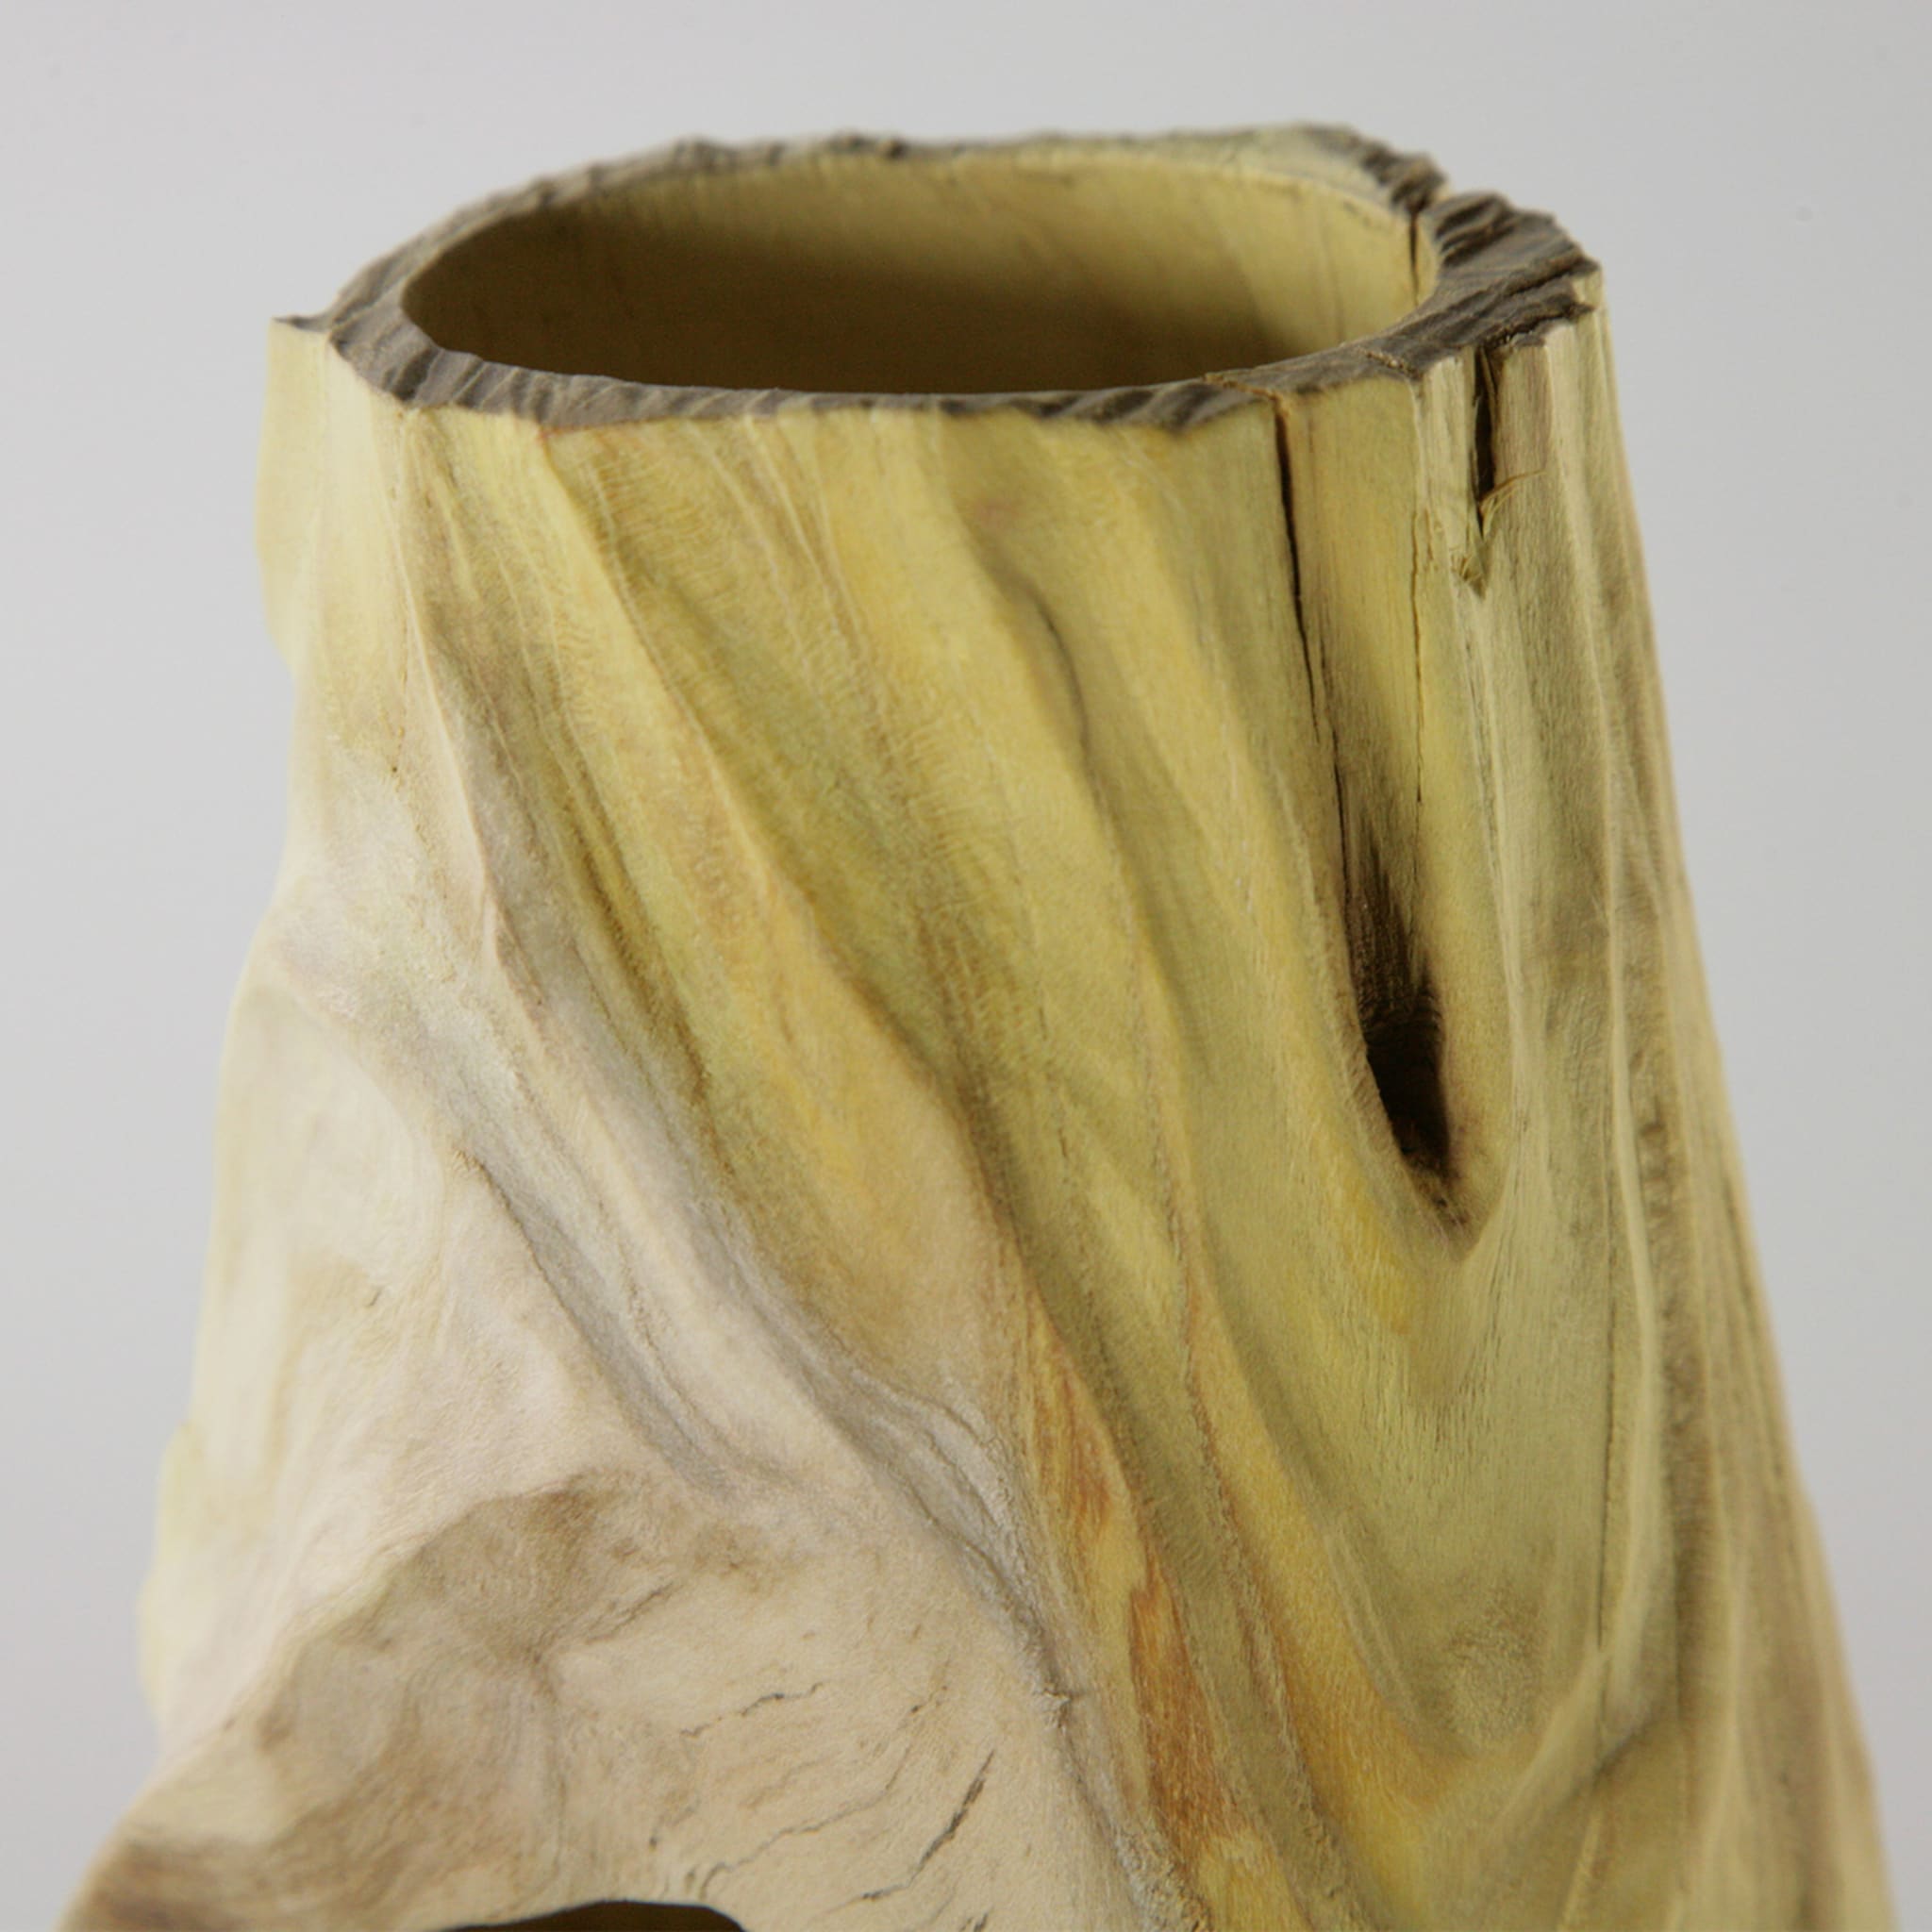 FTG Turned Wooden Vase #2 - Alternative view 3